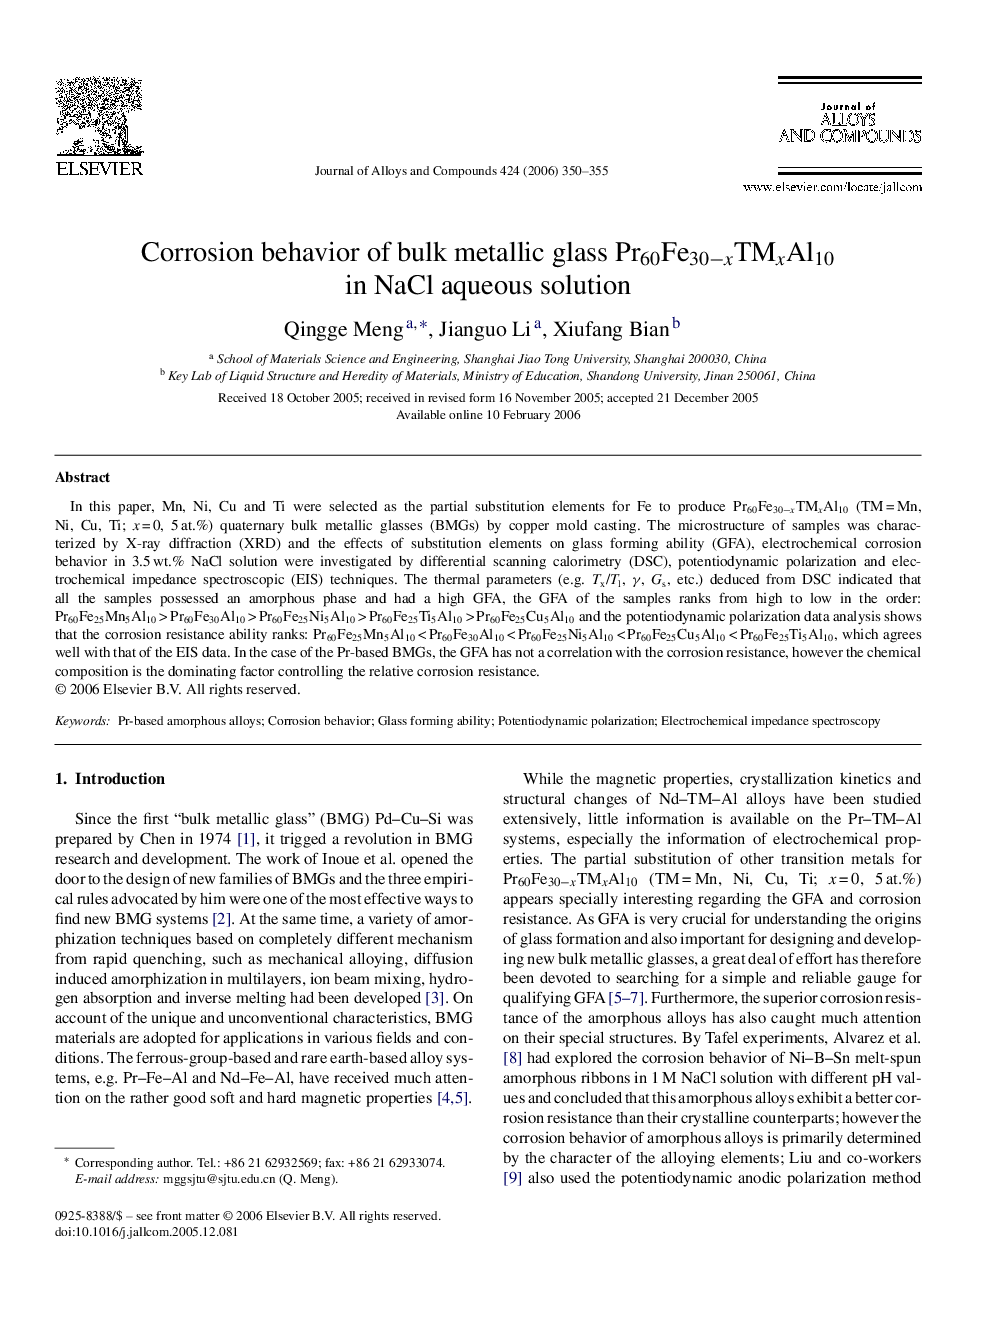 Corrosion behavior of bulk metallic glass Pr60Fe30−xTMxAl10 in NaCl aqueous solution